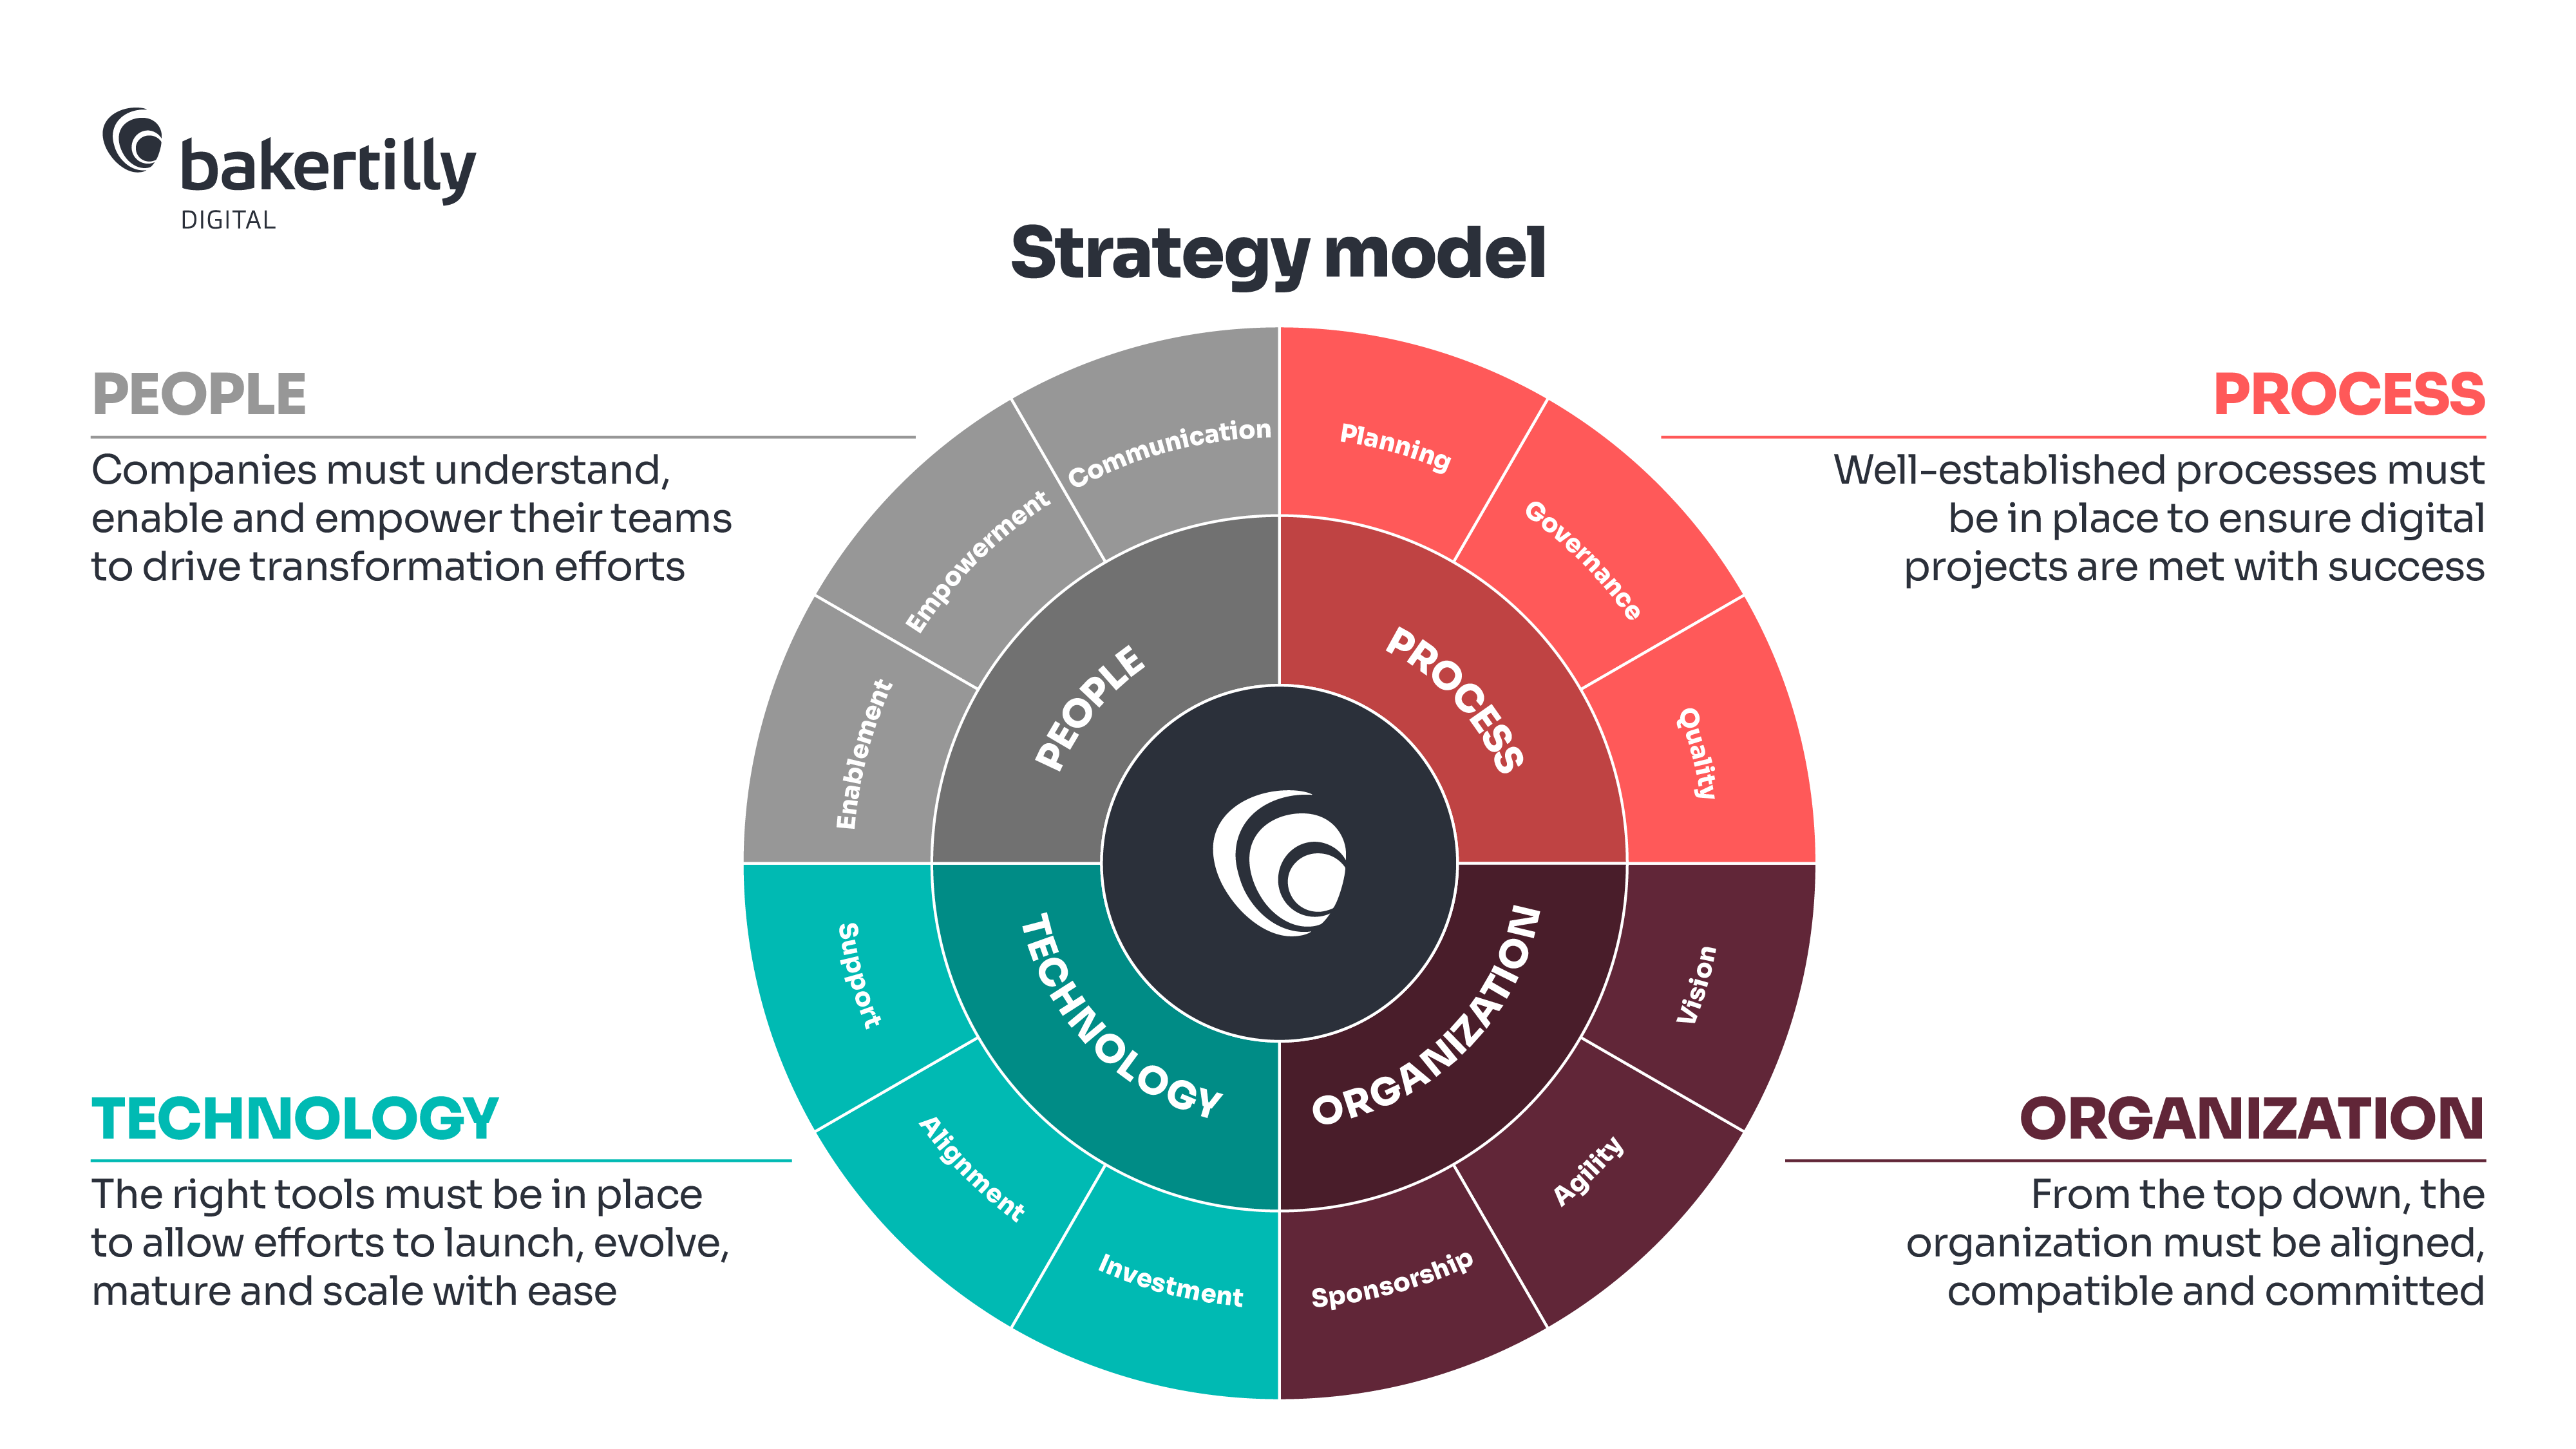 Baker Tilly digital strategy model